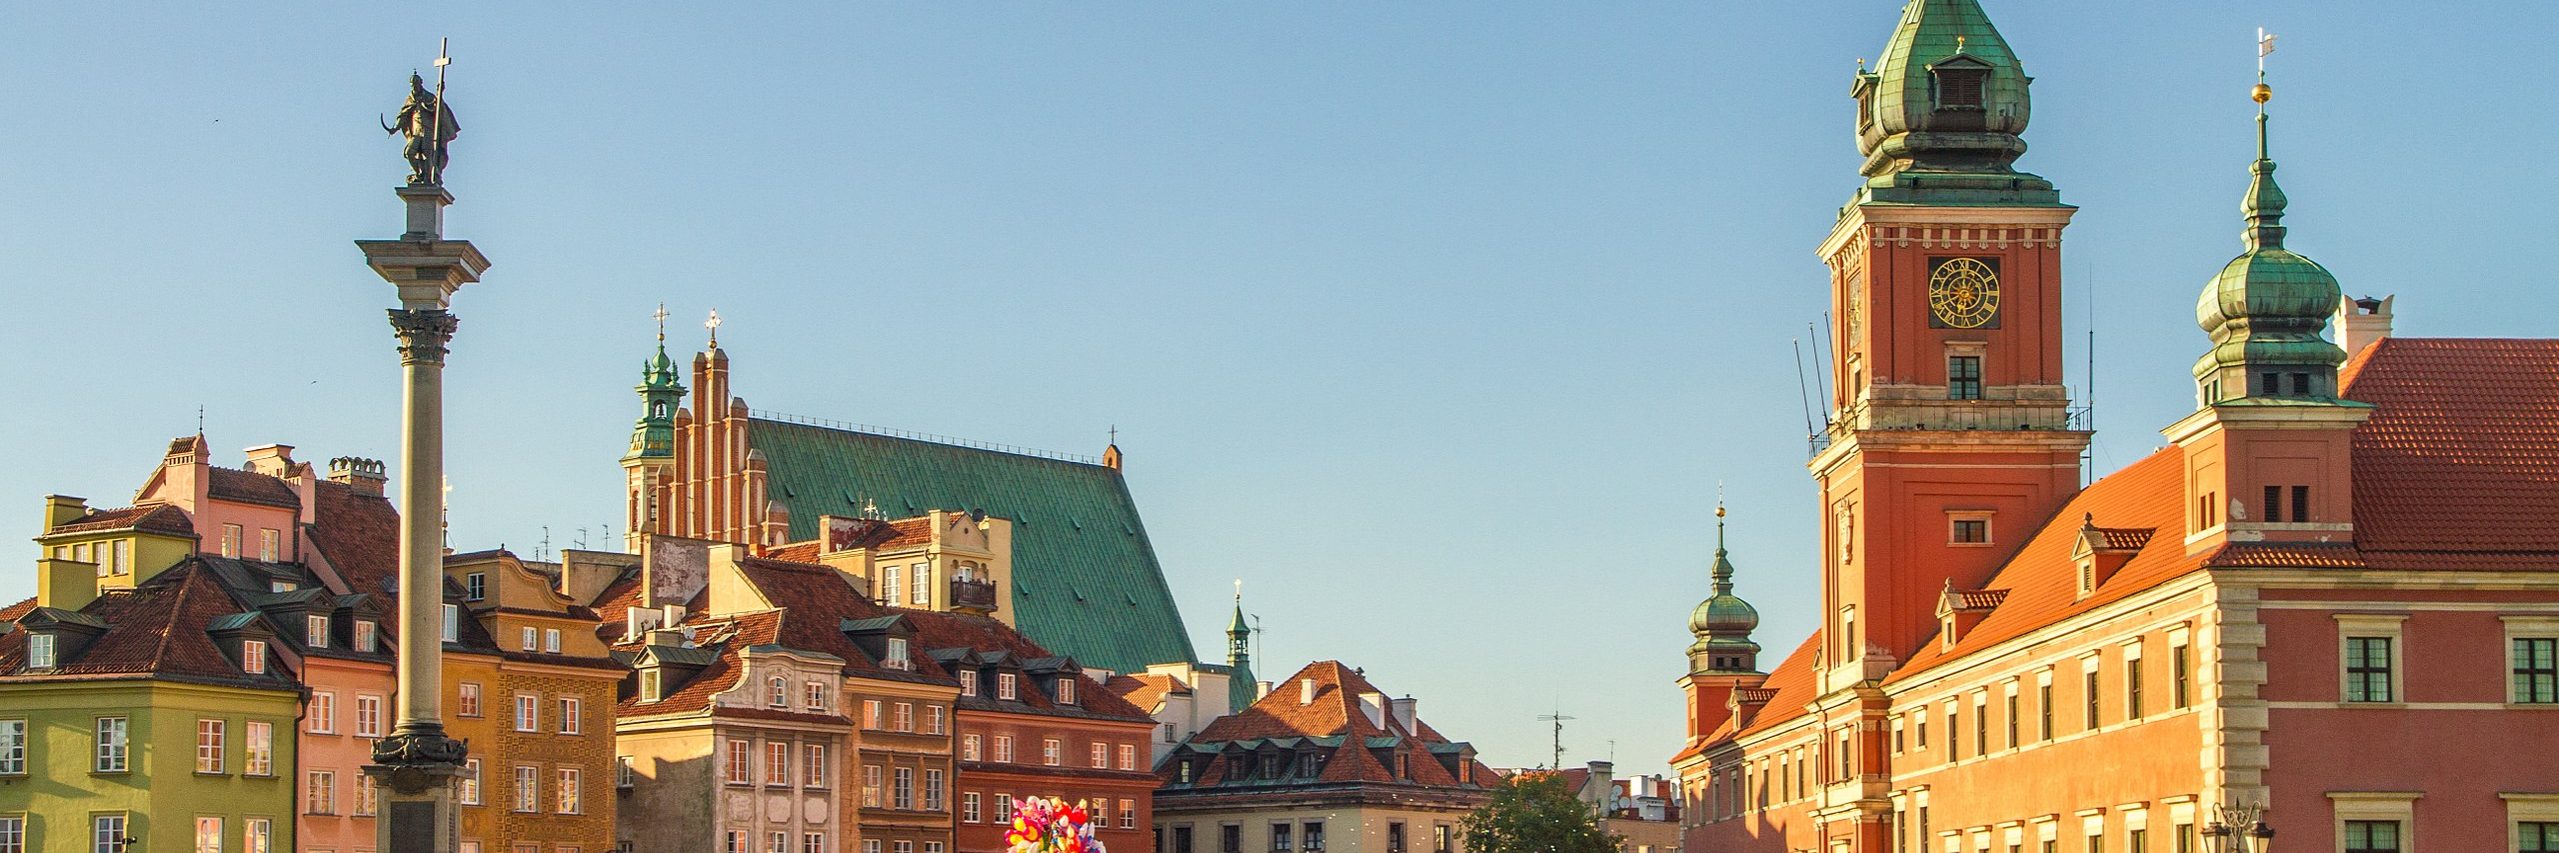 Market Square in Warsaw, Poland